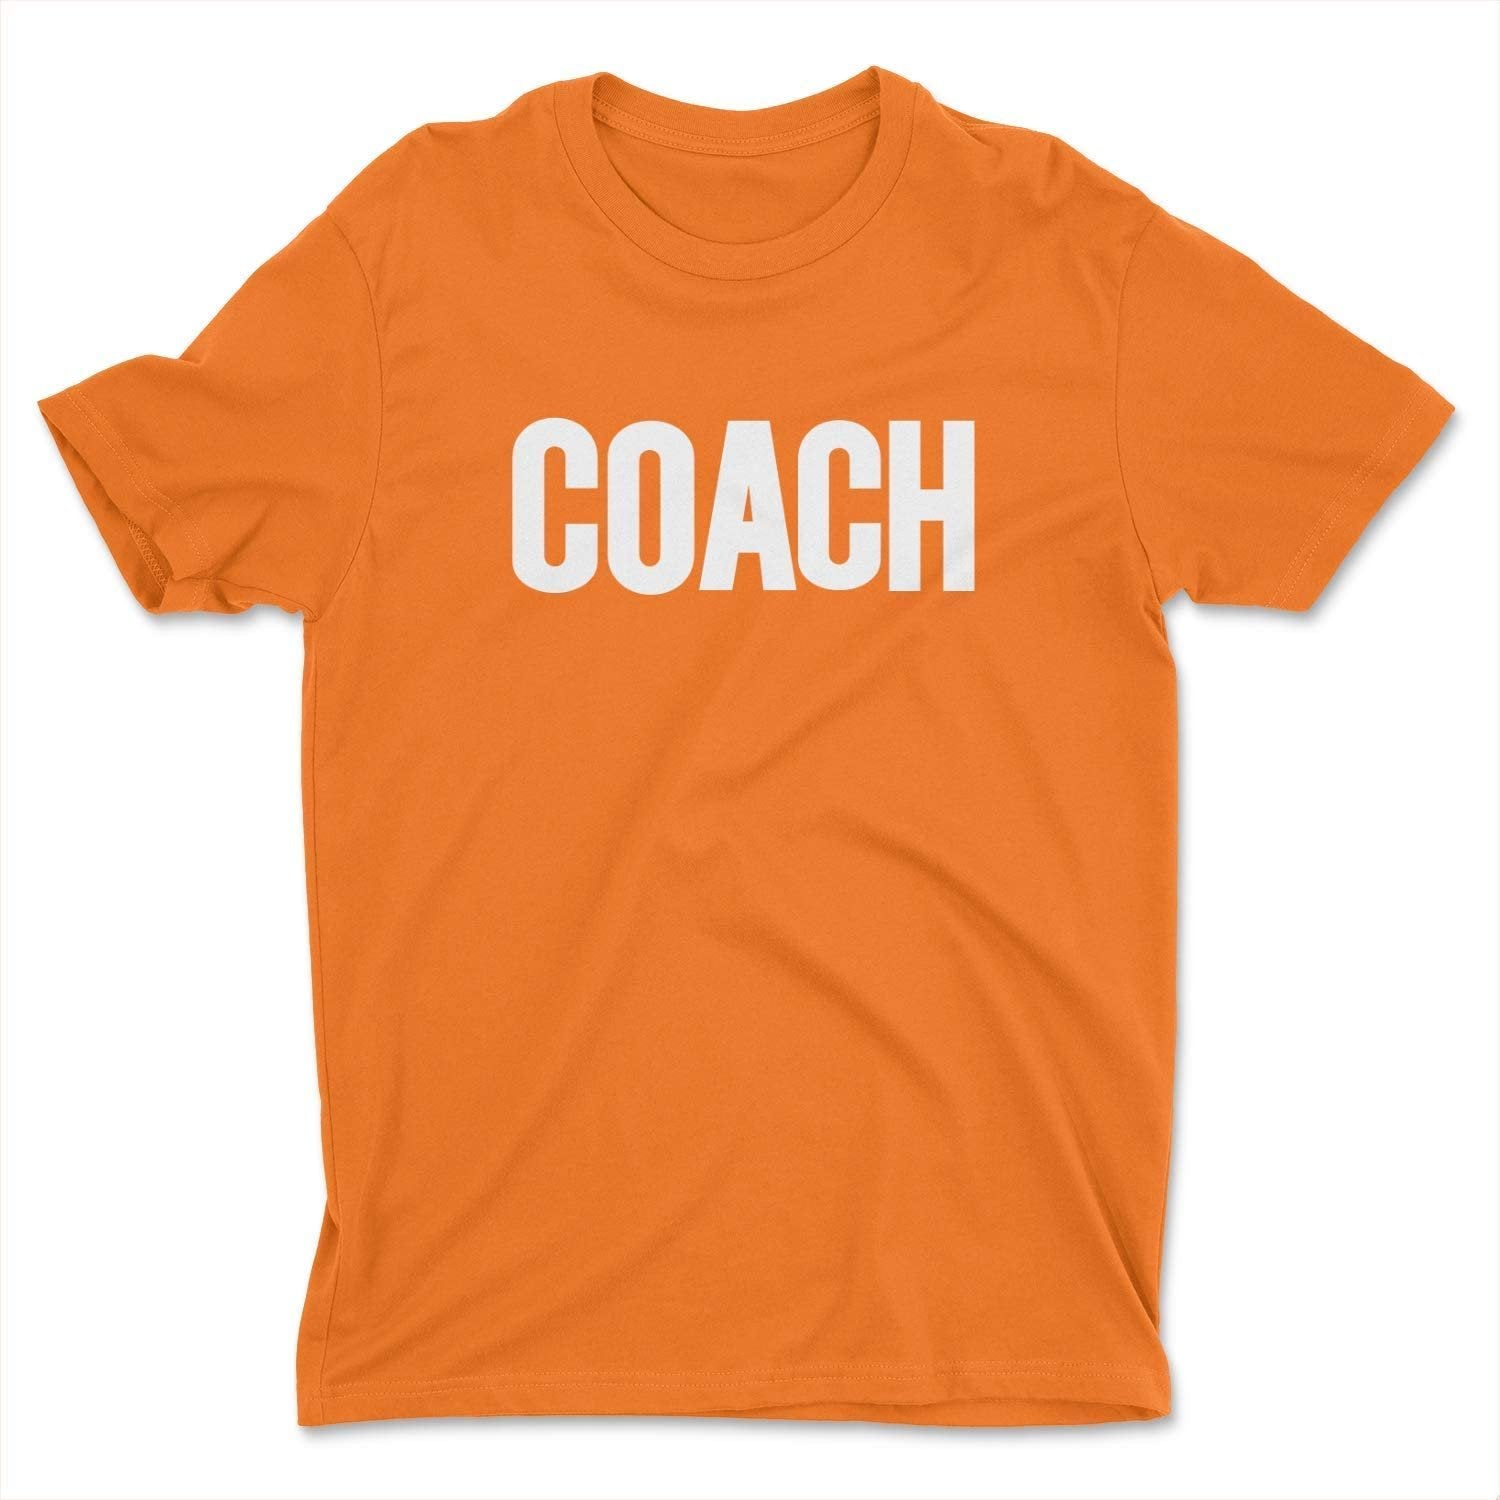 Coach Men's T-Shirt (Solid Design, Orange & White)